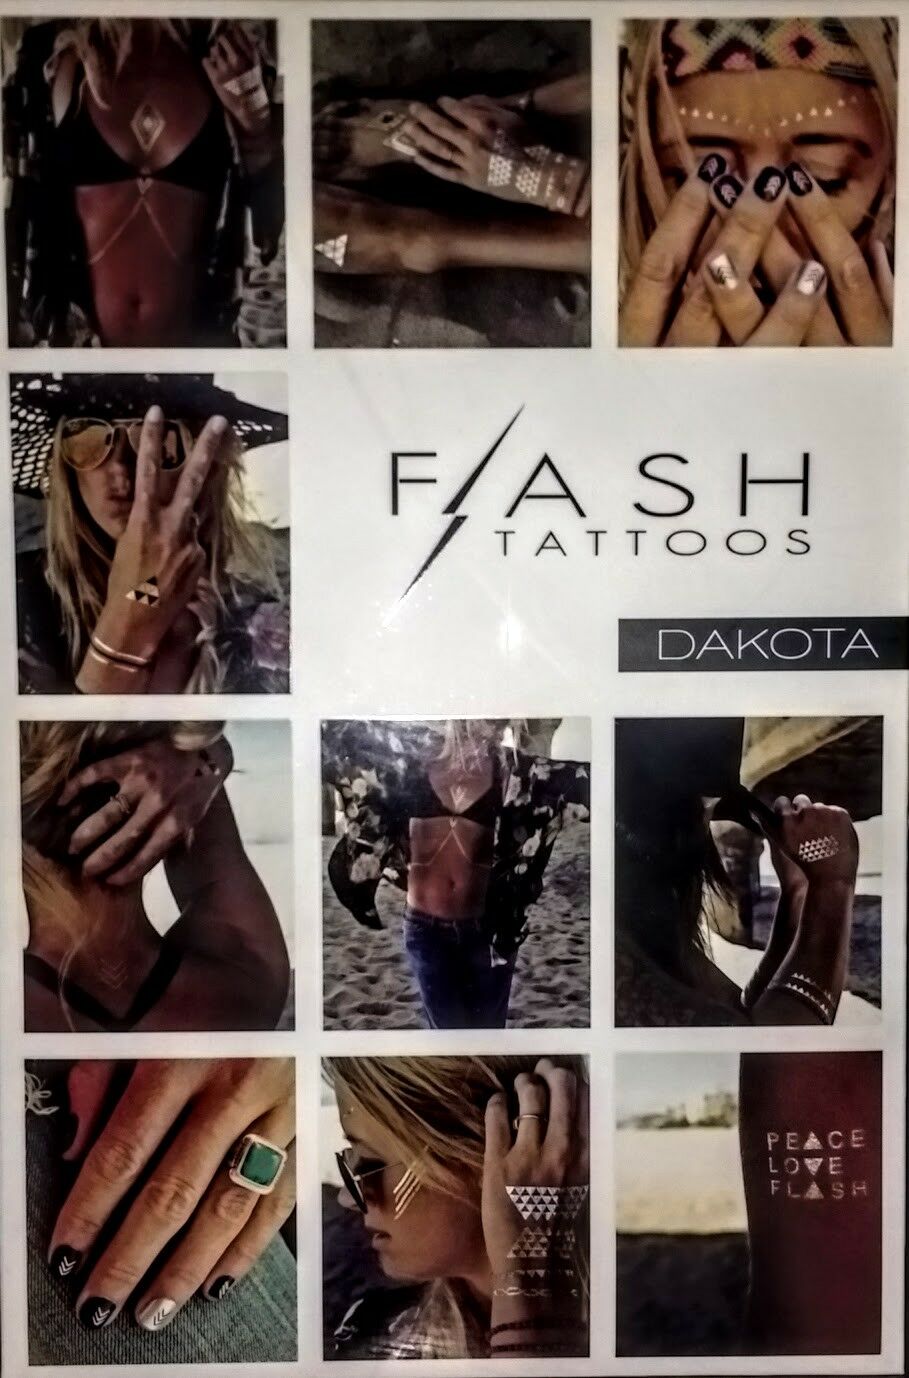 Flash Tattoos Dakota Jewelry Gold Silver Temporary Body Art Buy One Get One Free